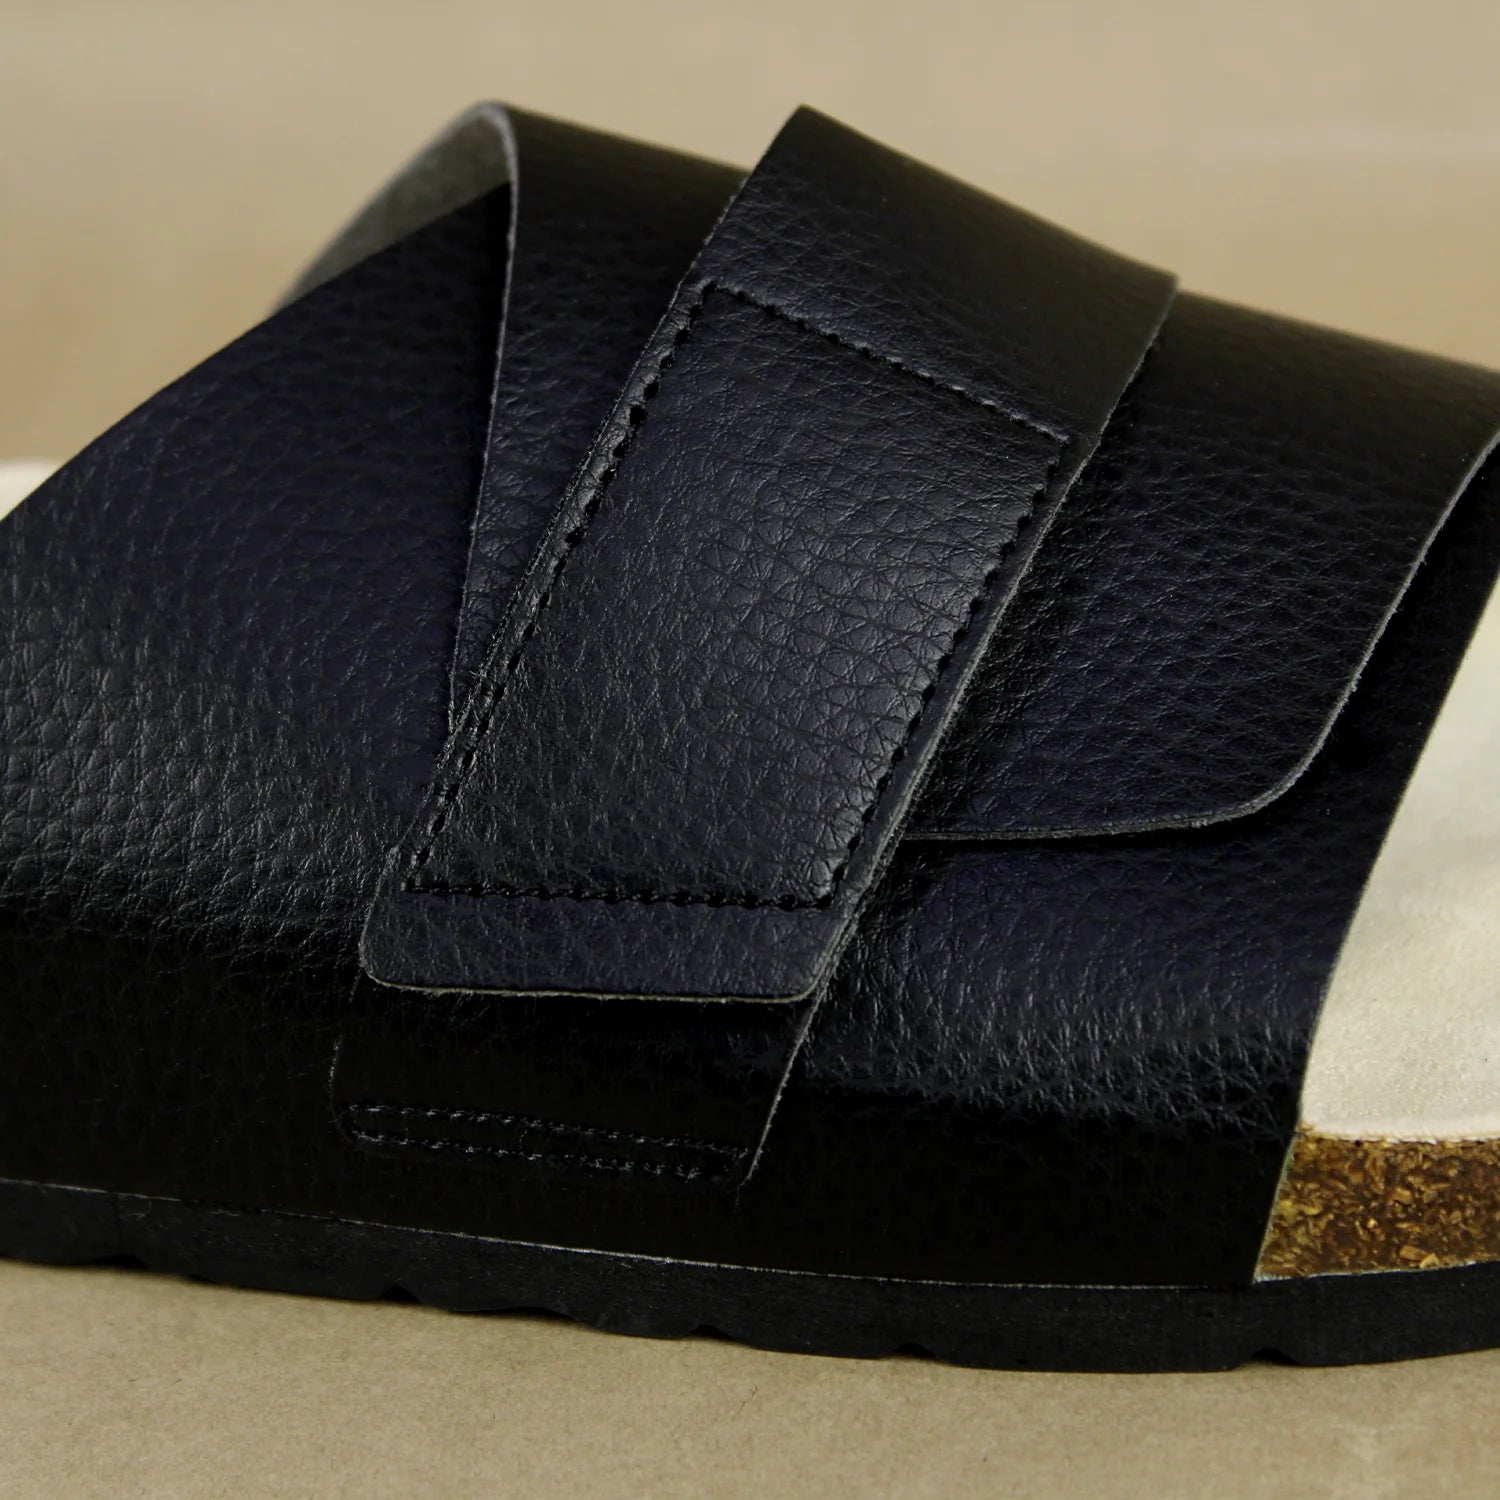 Men's black cork sandals with comfortable adjustable straps and cork footbed